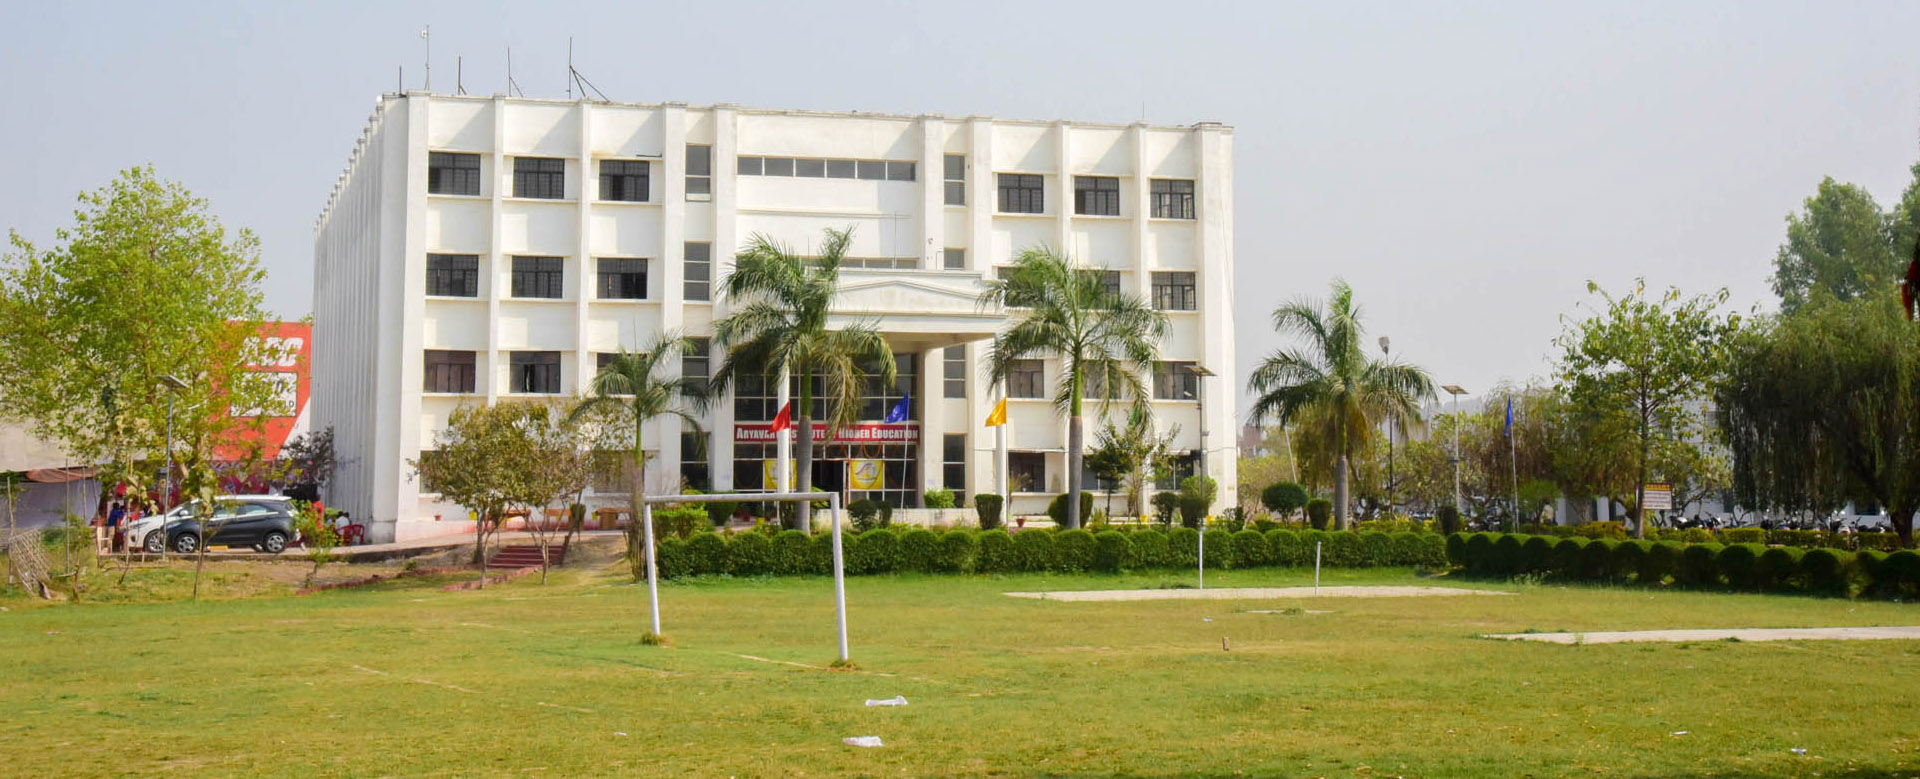 Aryavart Institute Of Higher Education, Lucknow